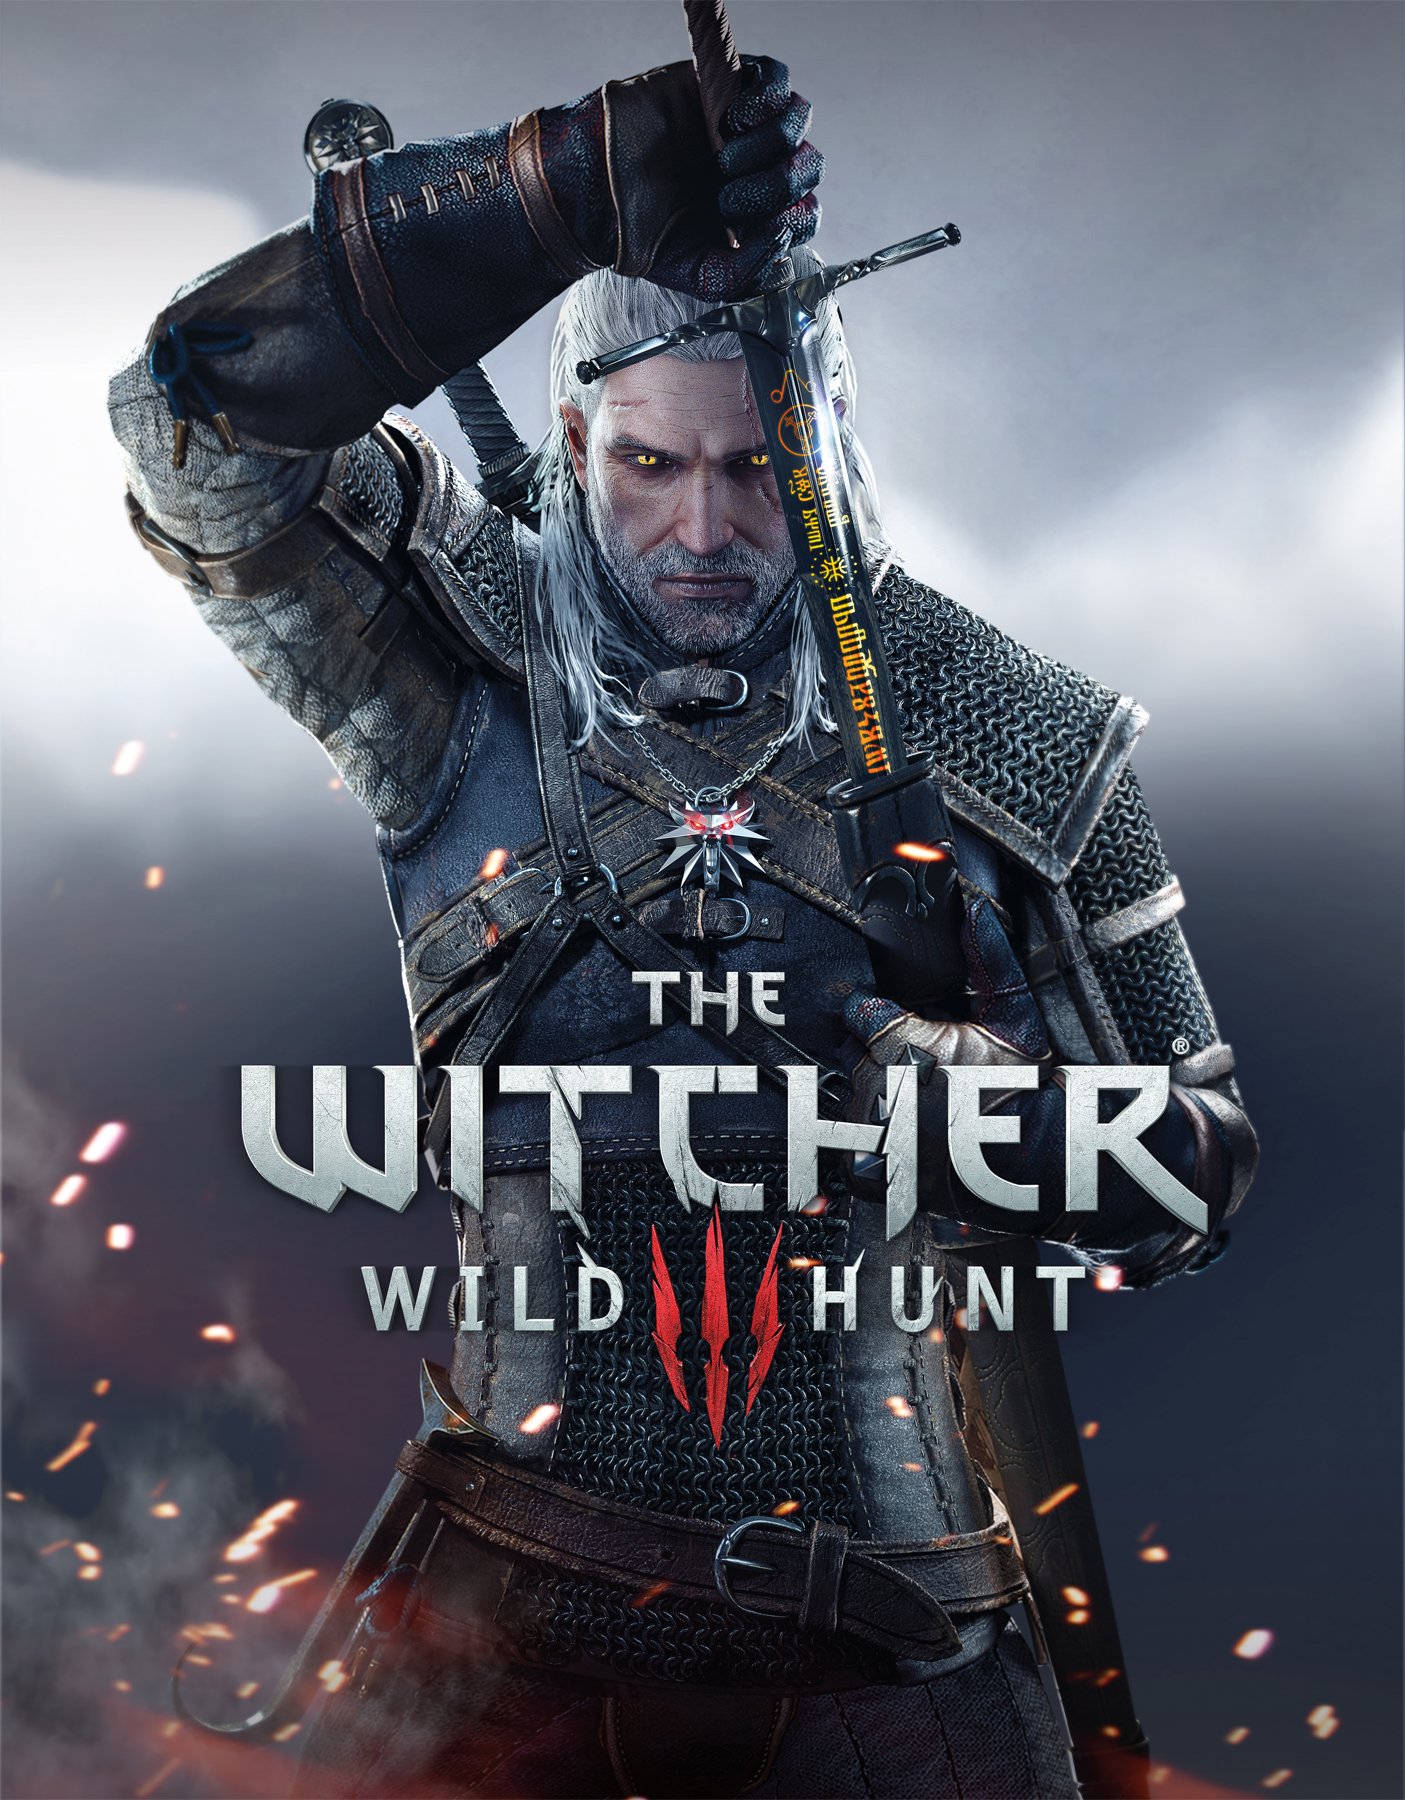 The Witcher 3: Wild Hunt (Ведьмак 3. Дикая Охота) - дата выхода, отзывы